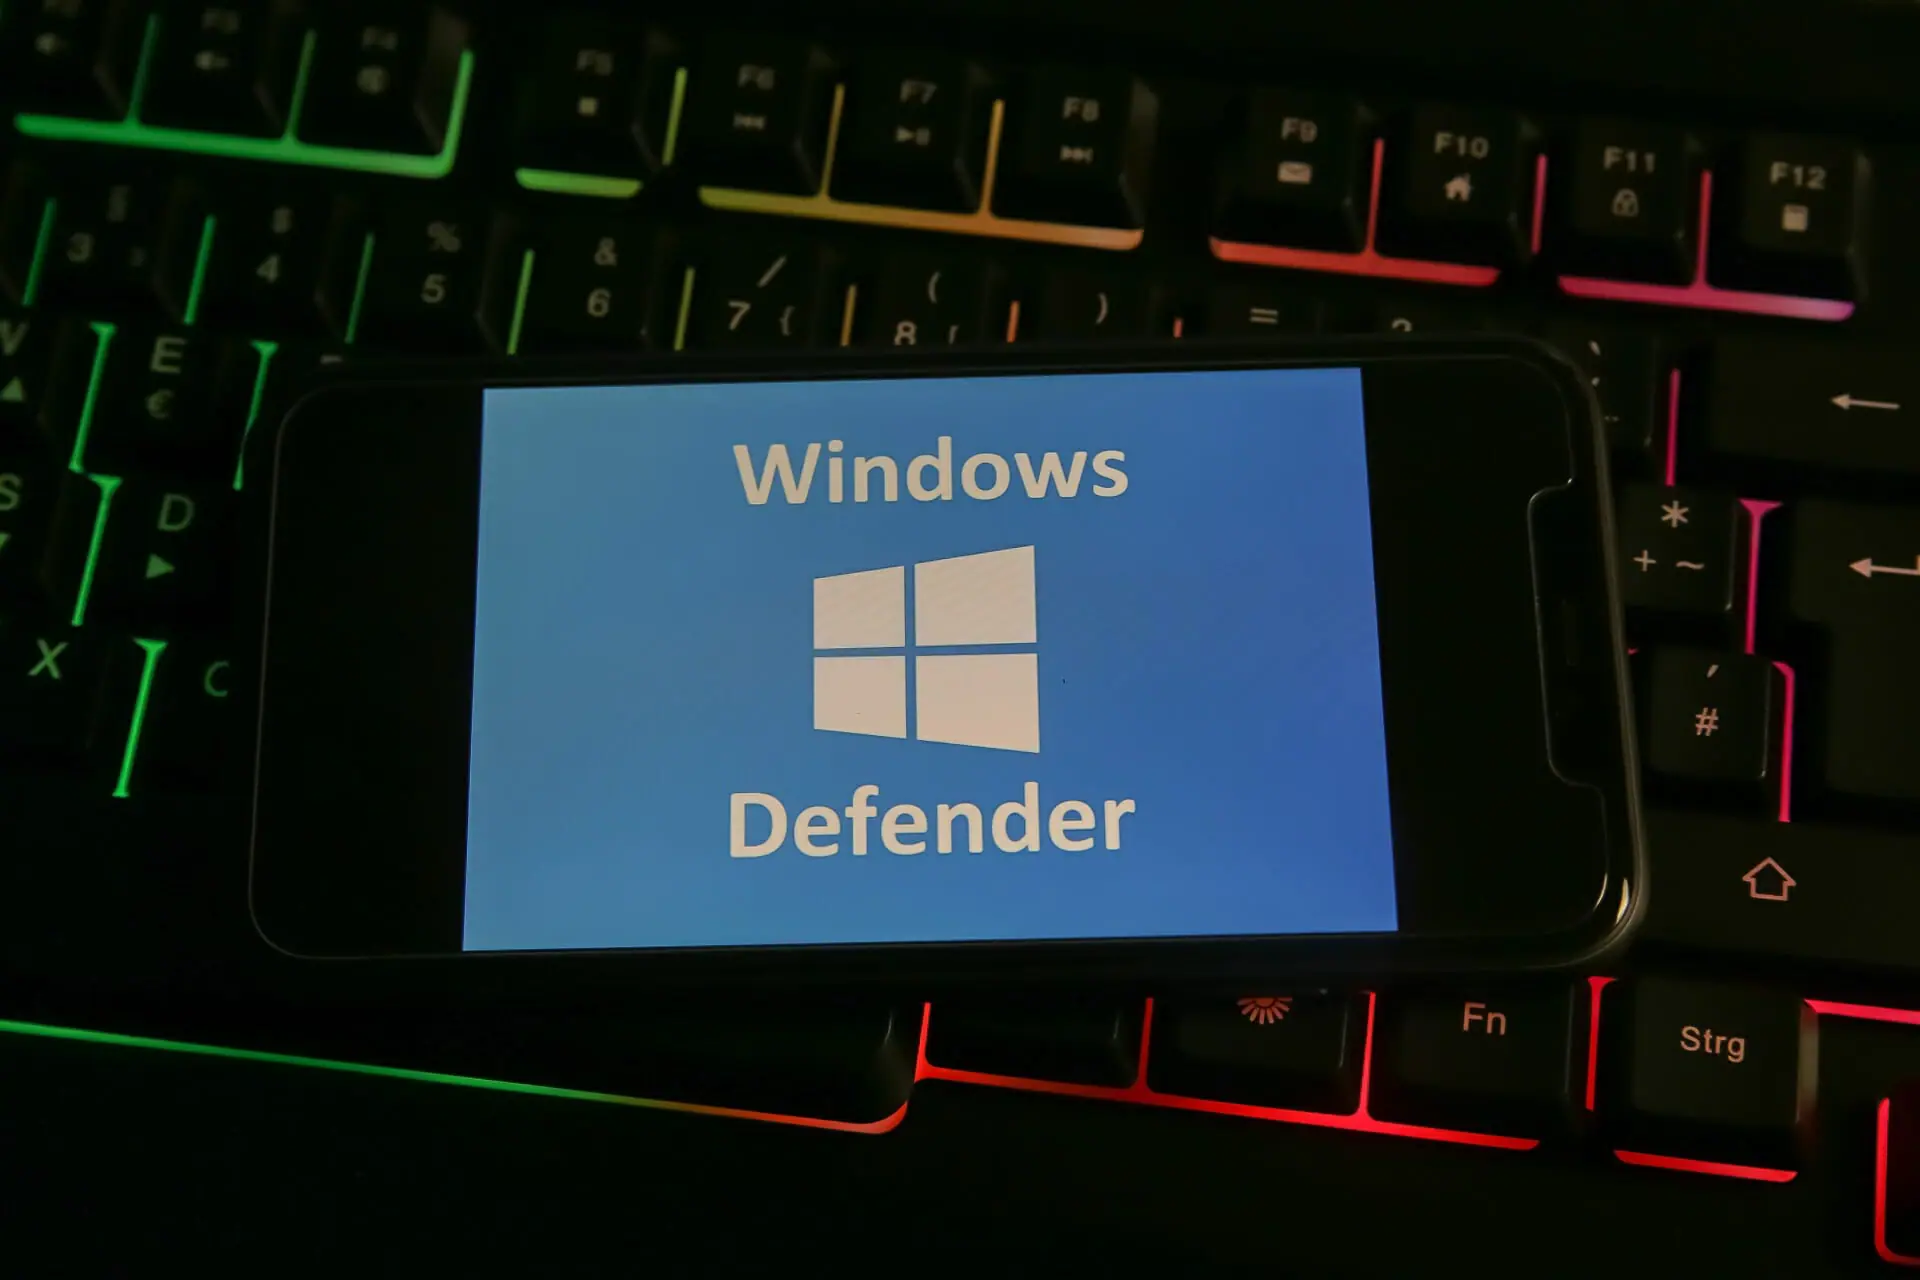 Windows Defender doesn't work